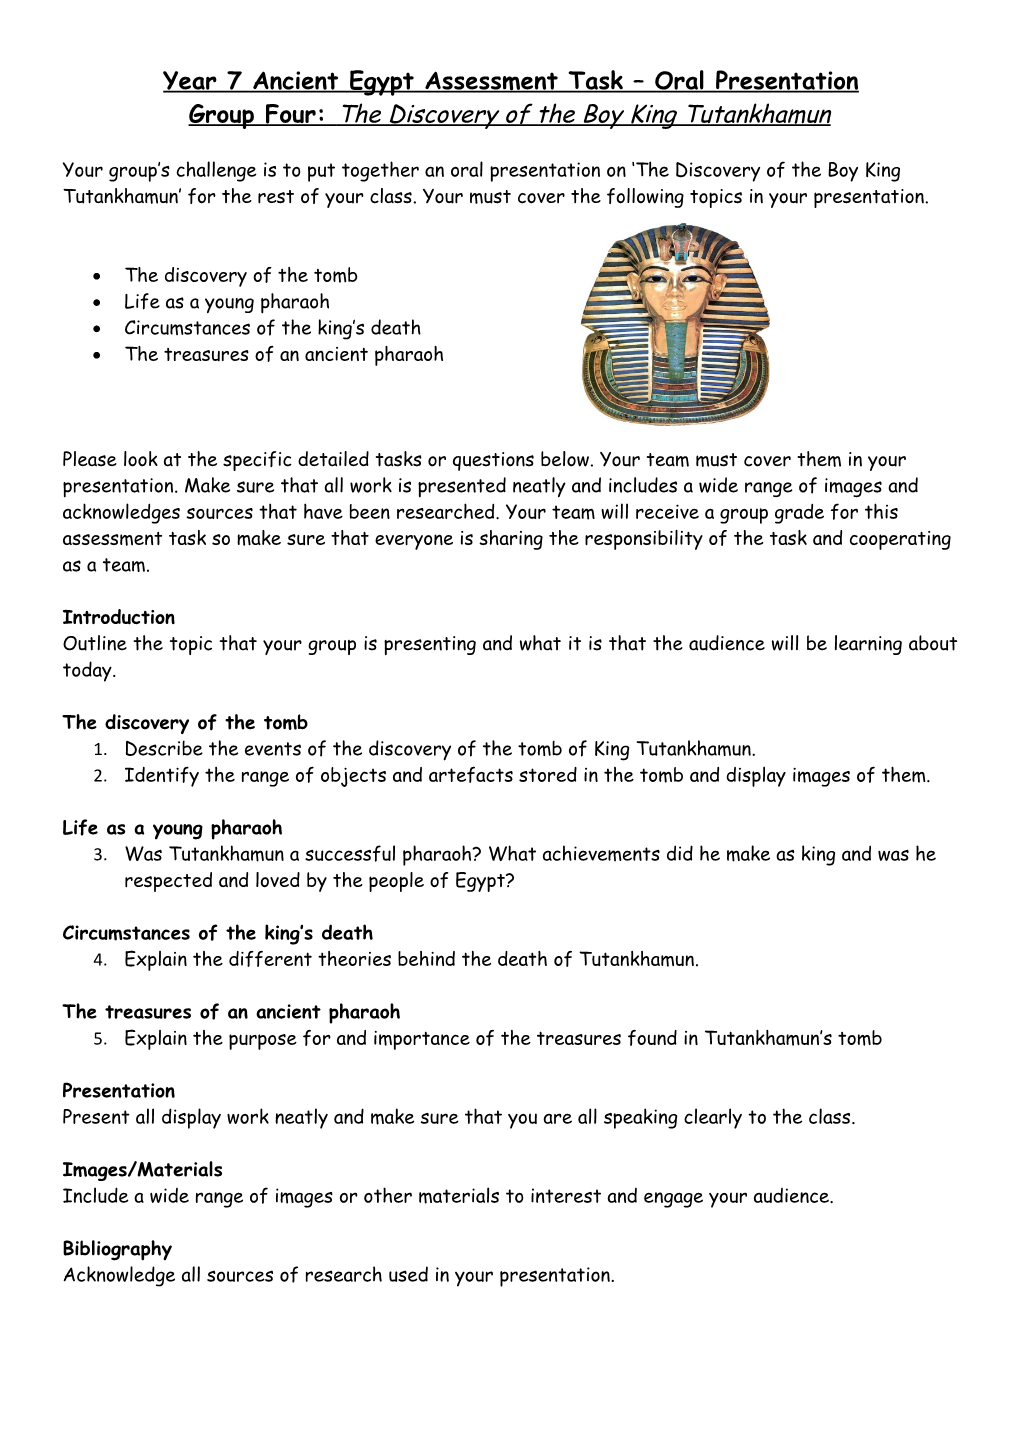 Year 7 Ancient Egypt Assessment Task Oral Presentation